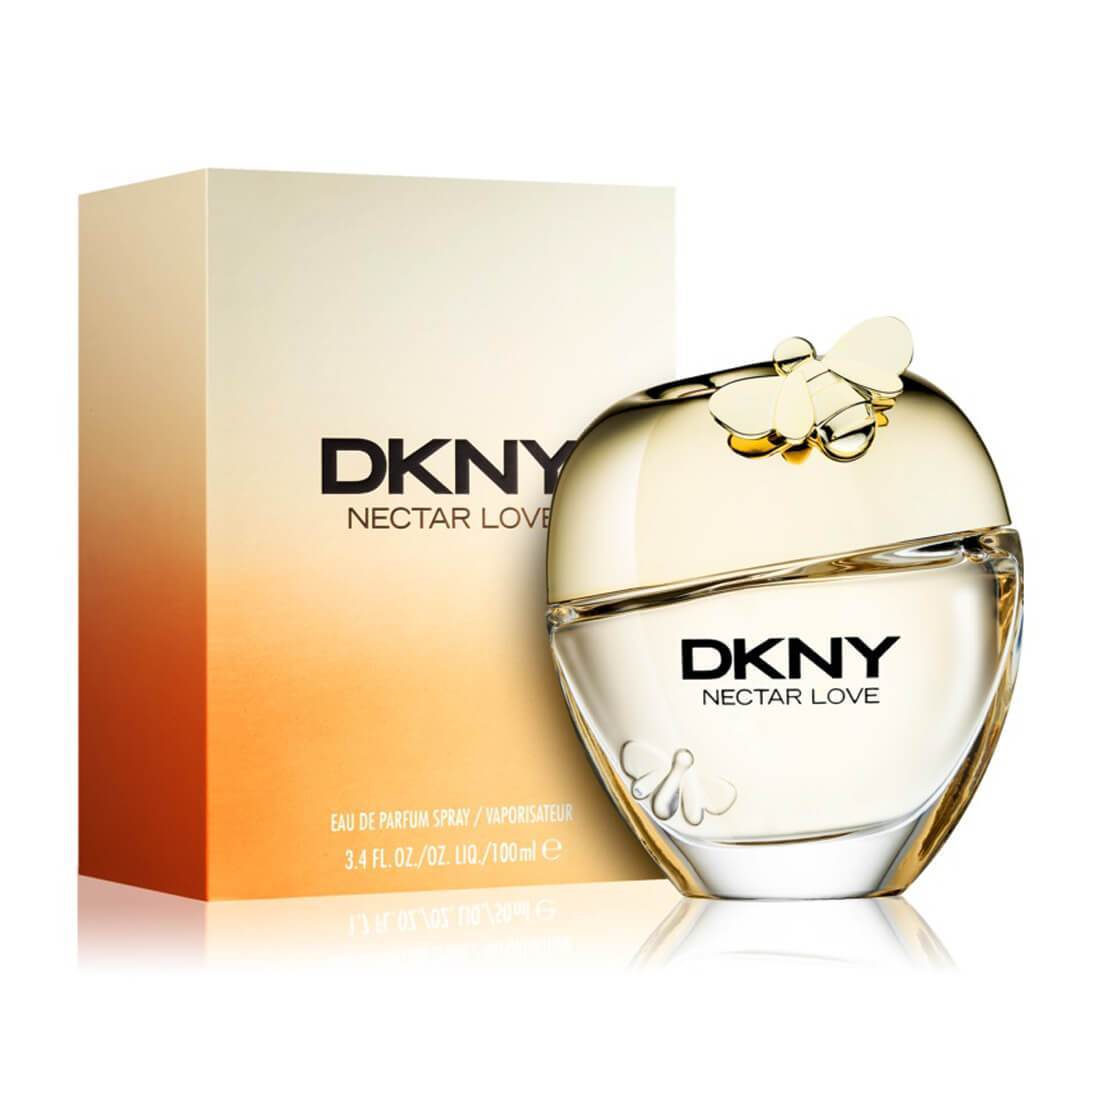 DKNY Nectar Love EDP xribbonline perfume fragrance buy shop online